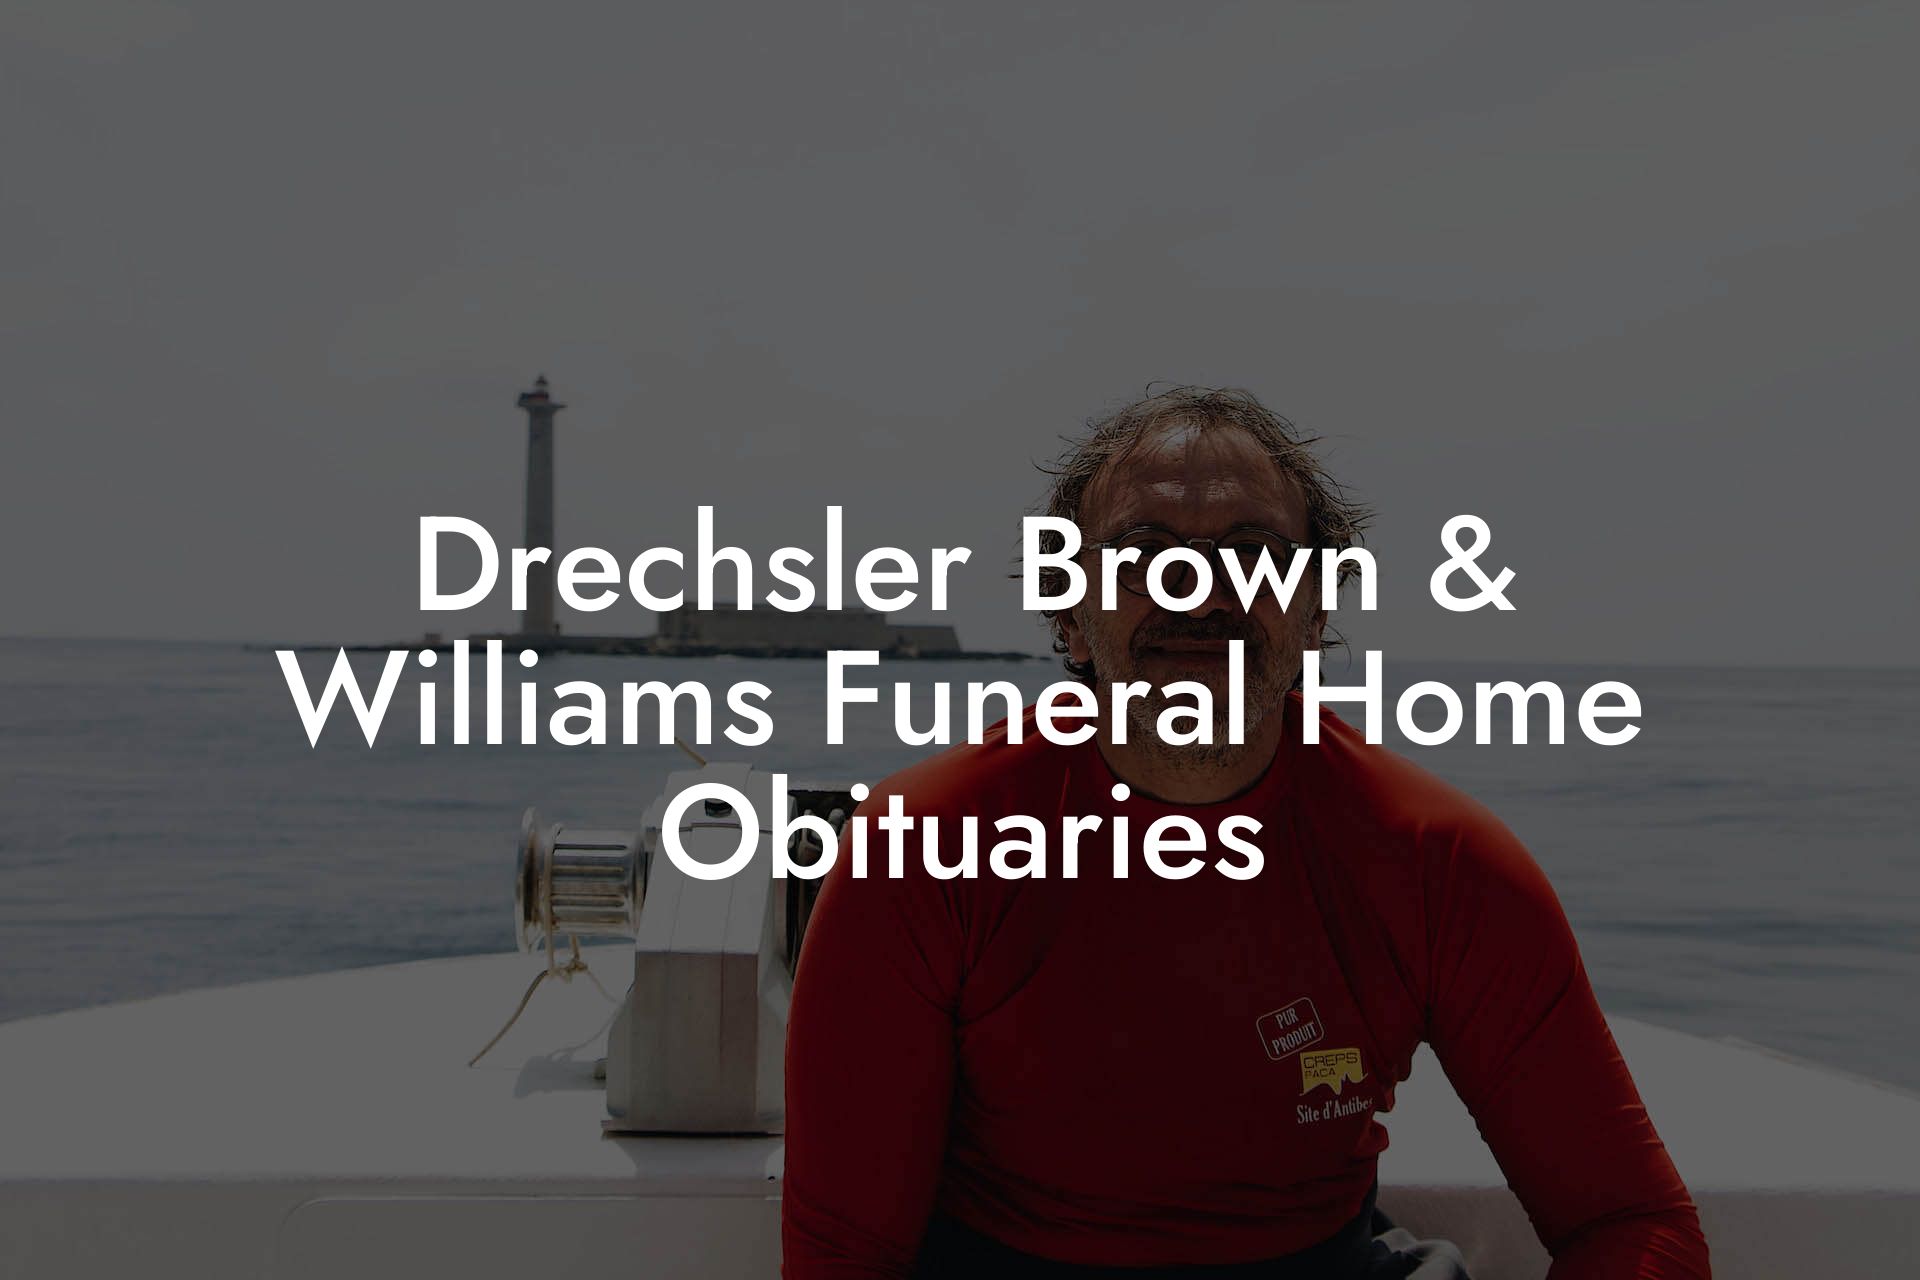 Drechsler Brown & Williams Funeral Home Obituaries